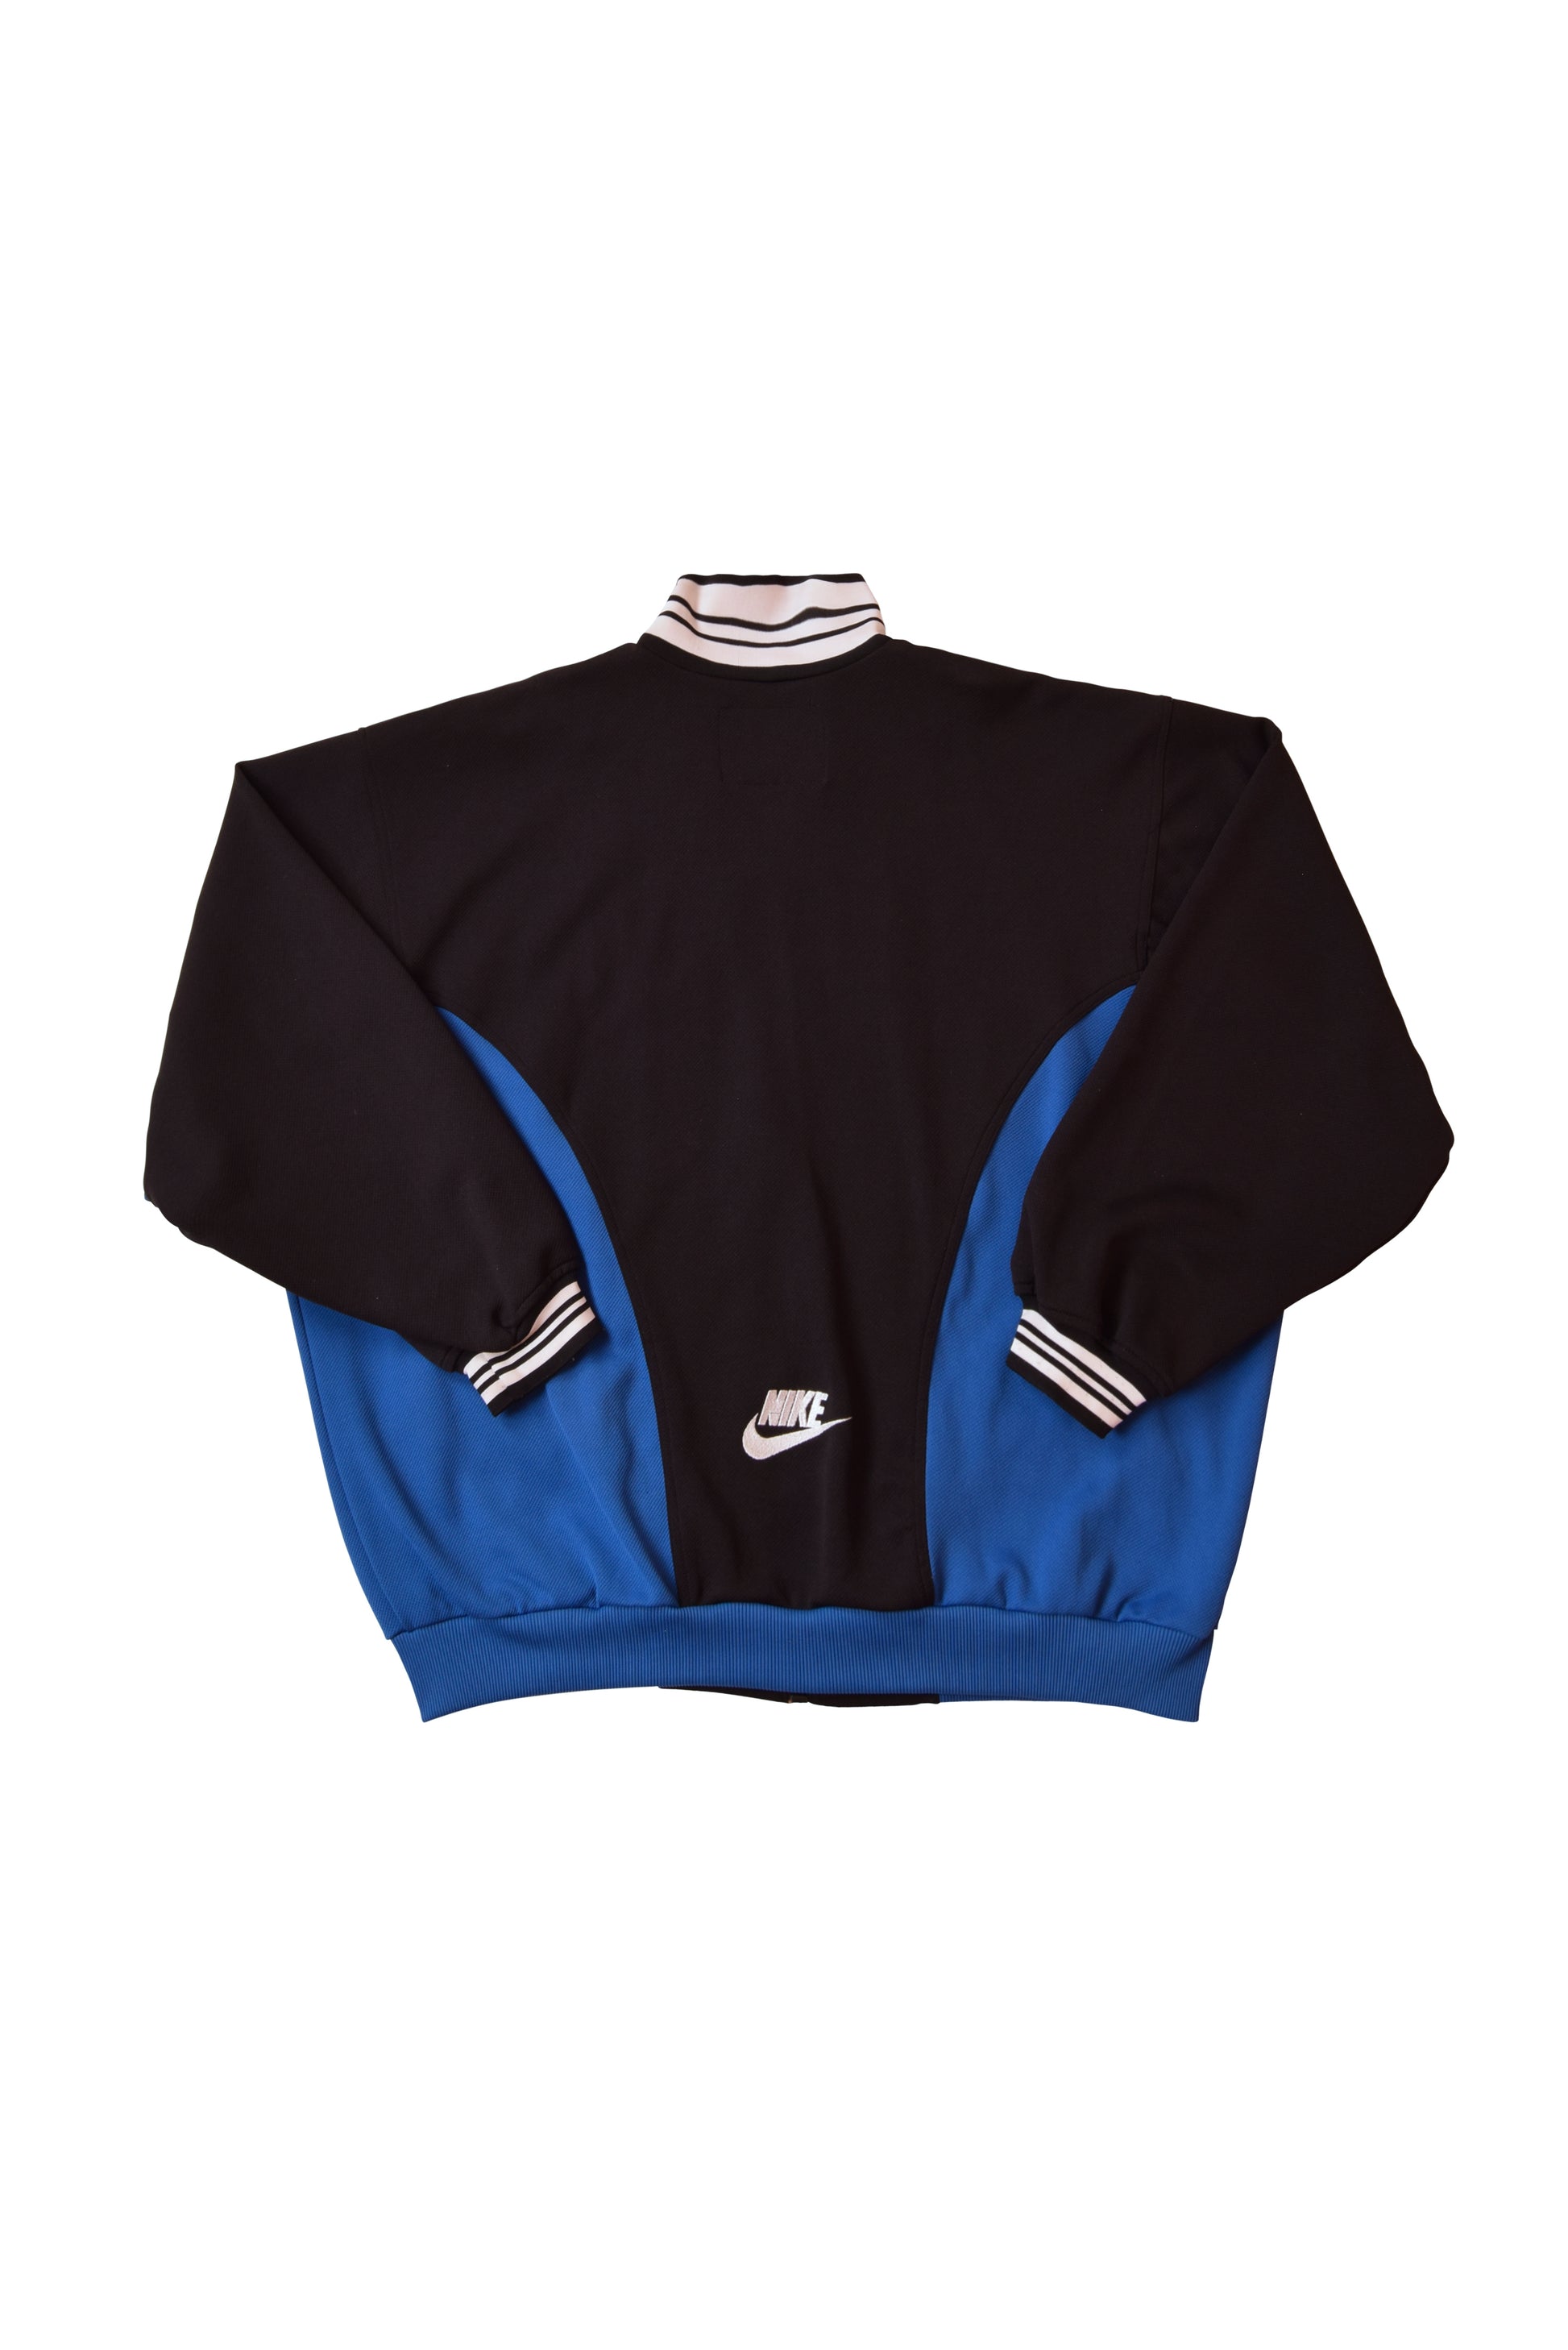 Vintage Nike Premier Jacket / Track Top Size XL - XXL